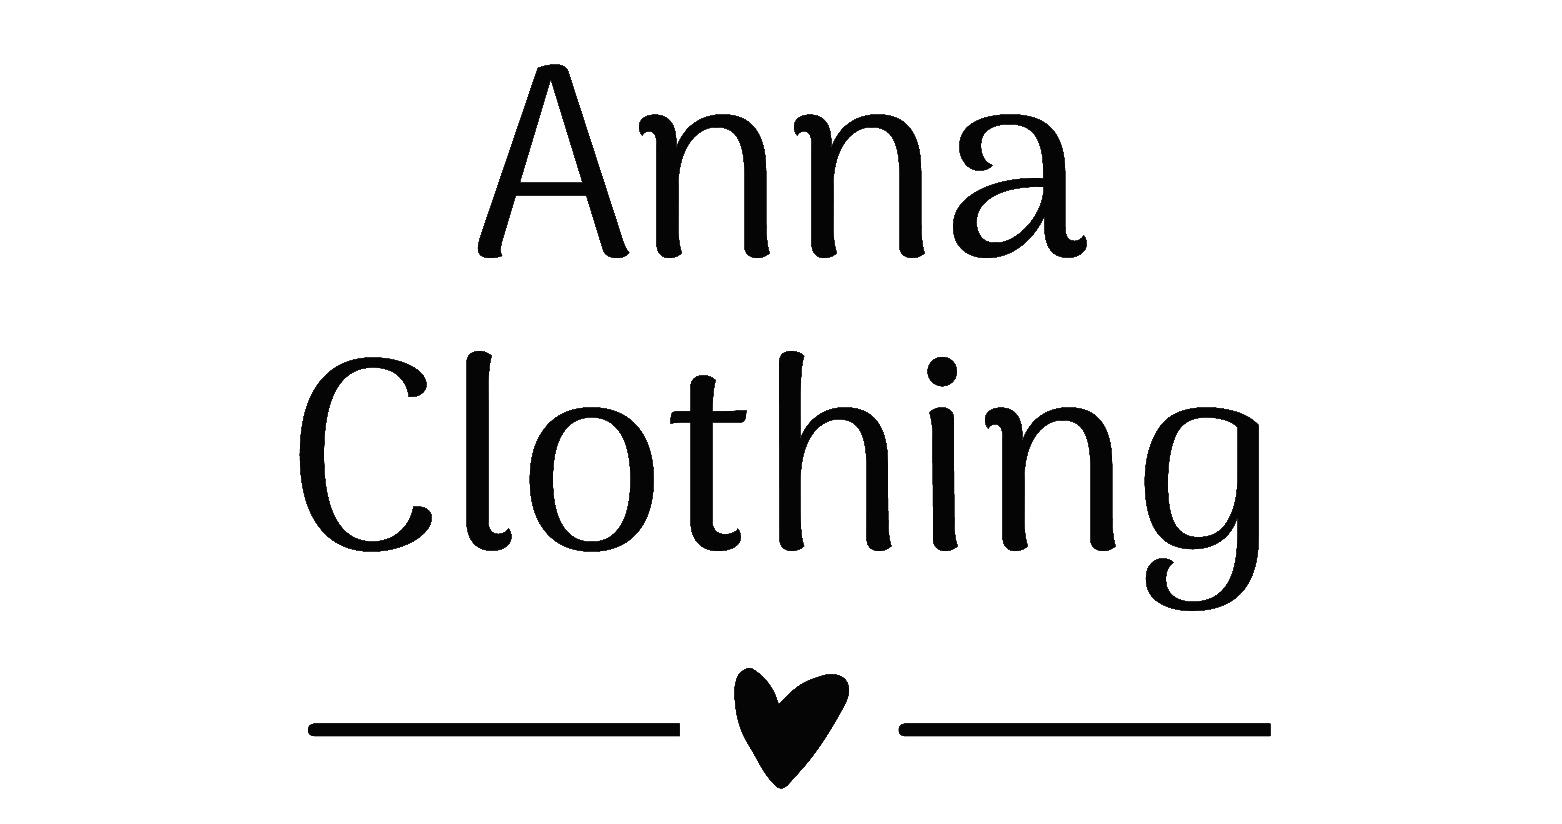 Anna Clothing 